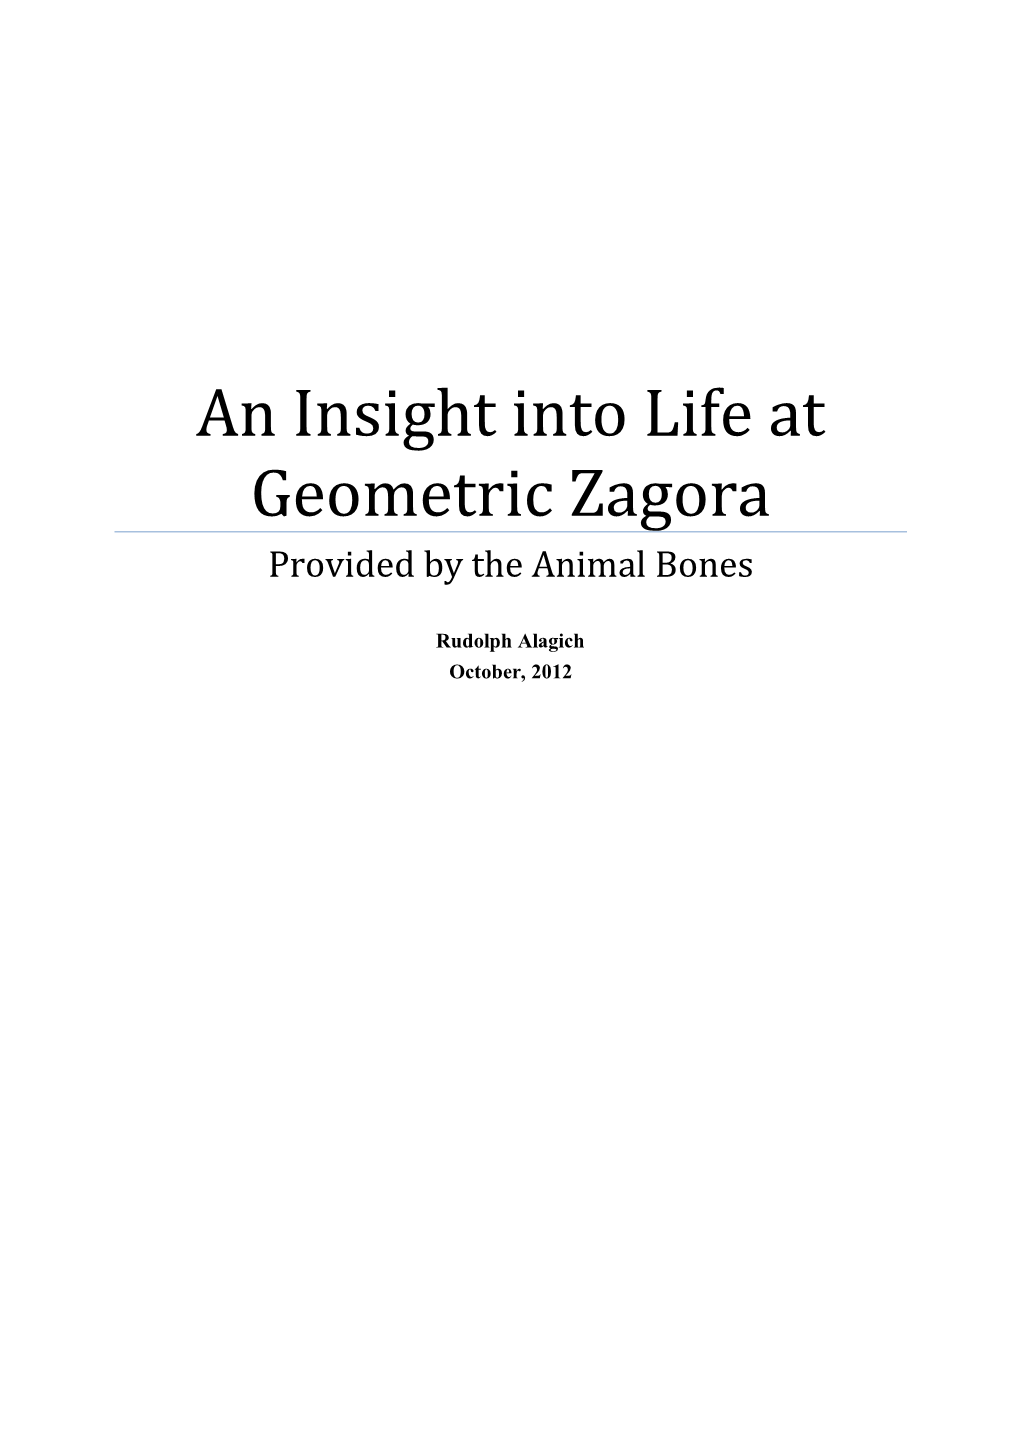 An Insight Into Life at Geometric Zagora Provided by the Animal Bones